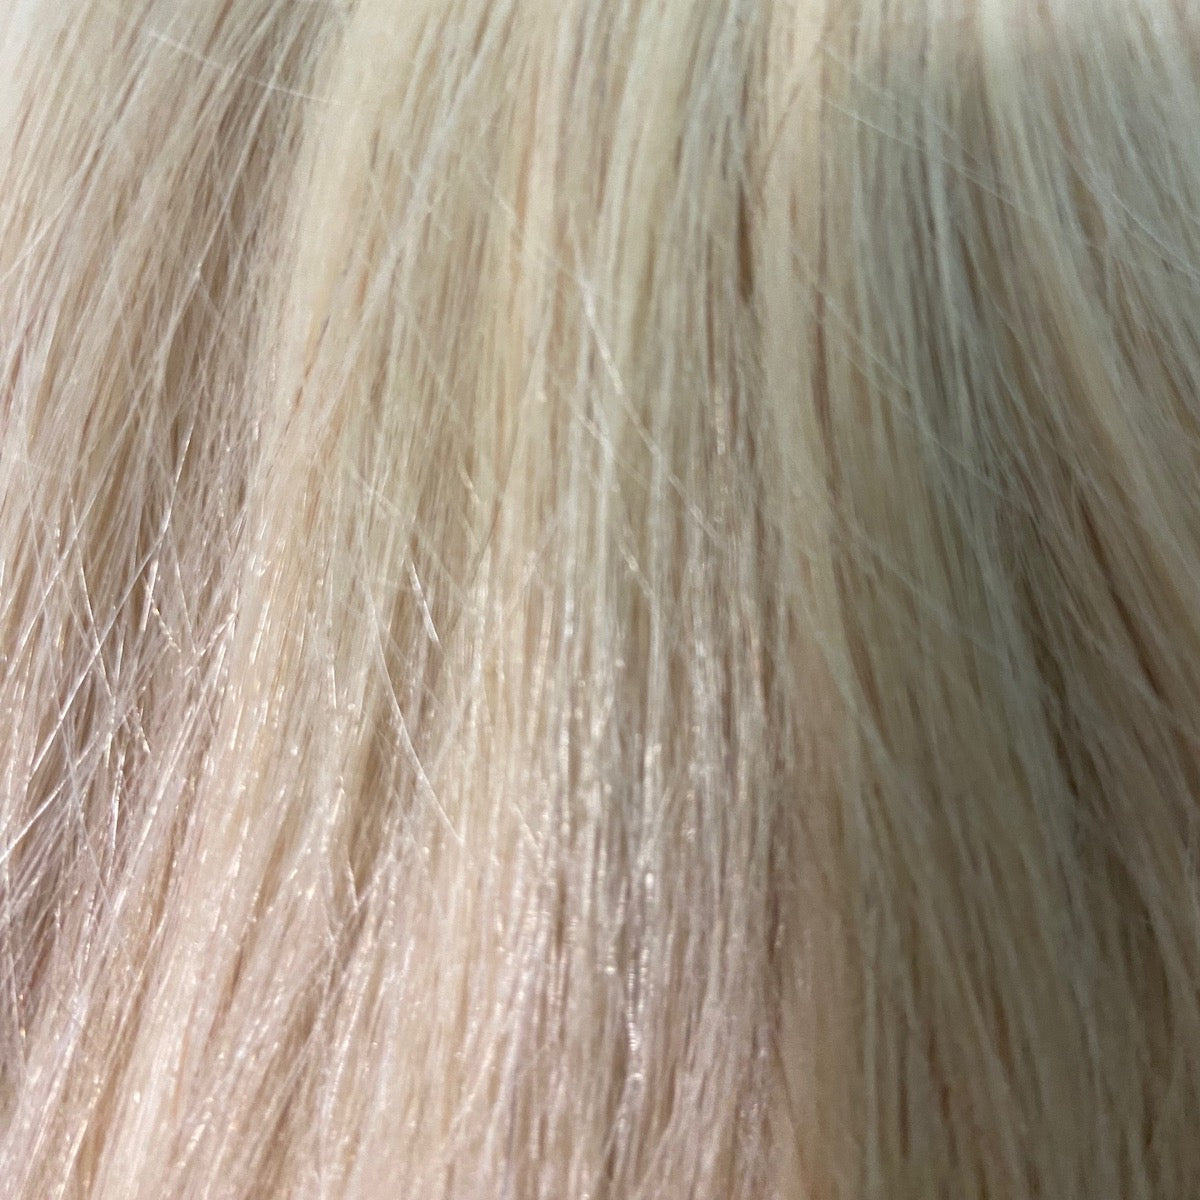 Machine-Tied Weft 18" 130g Professional Hair Extensions - #19 Desert Blonde